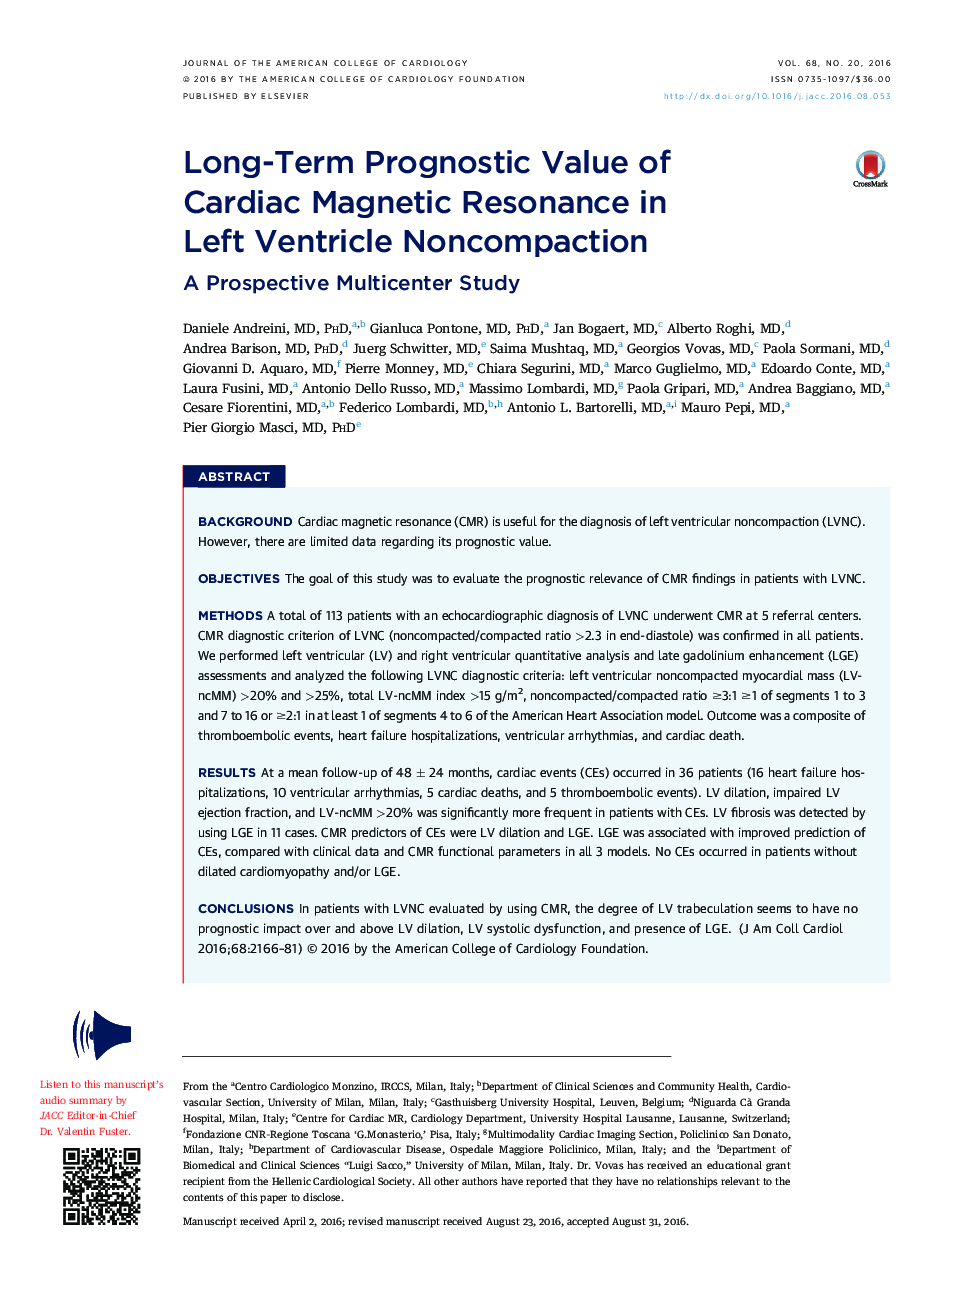 Original InvestigationLong-Term Prognostic Value of CardiacÂ Magnetic Resonance in LeftÂ Ventricle Noncompaction: A Prospective Multicenter Study